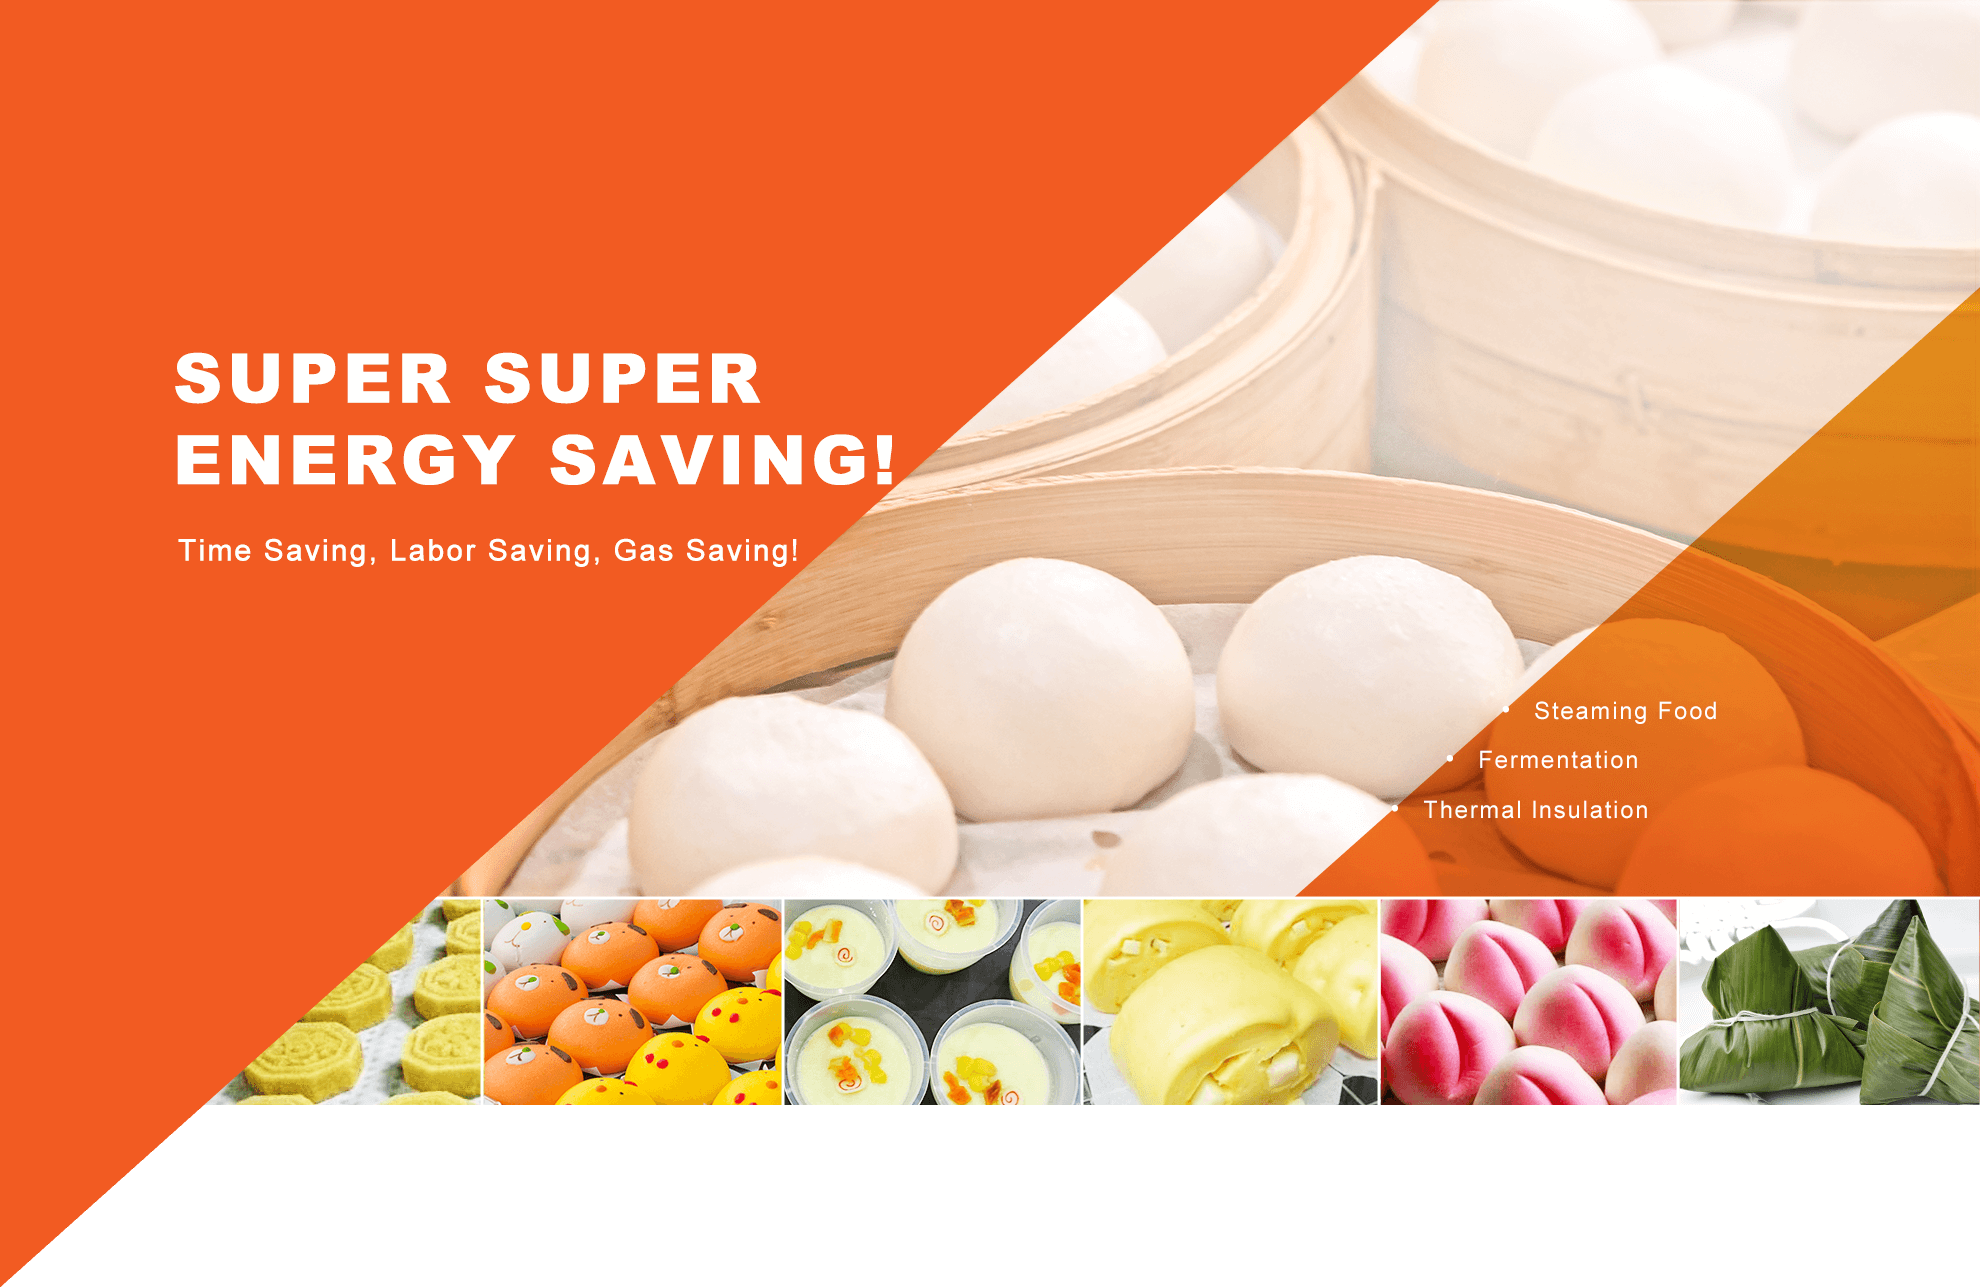 Super Super-Energy Saving! Time Saving, Labor Saving, Gas Saving!